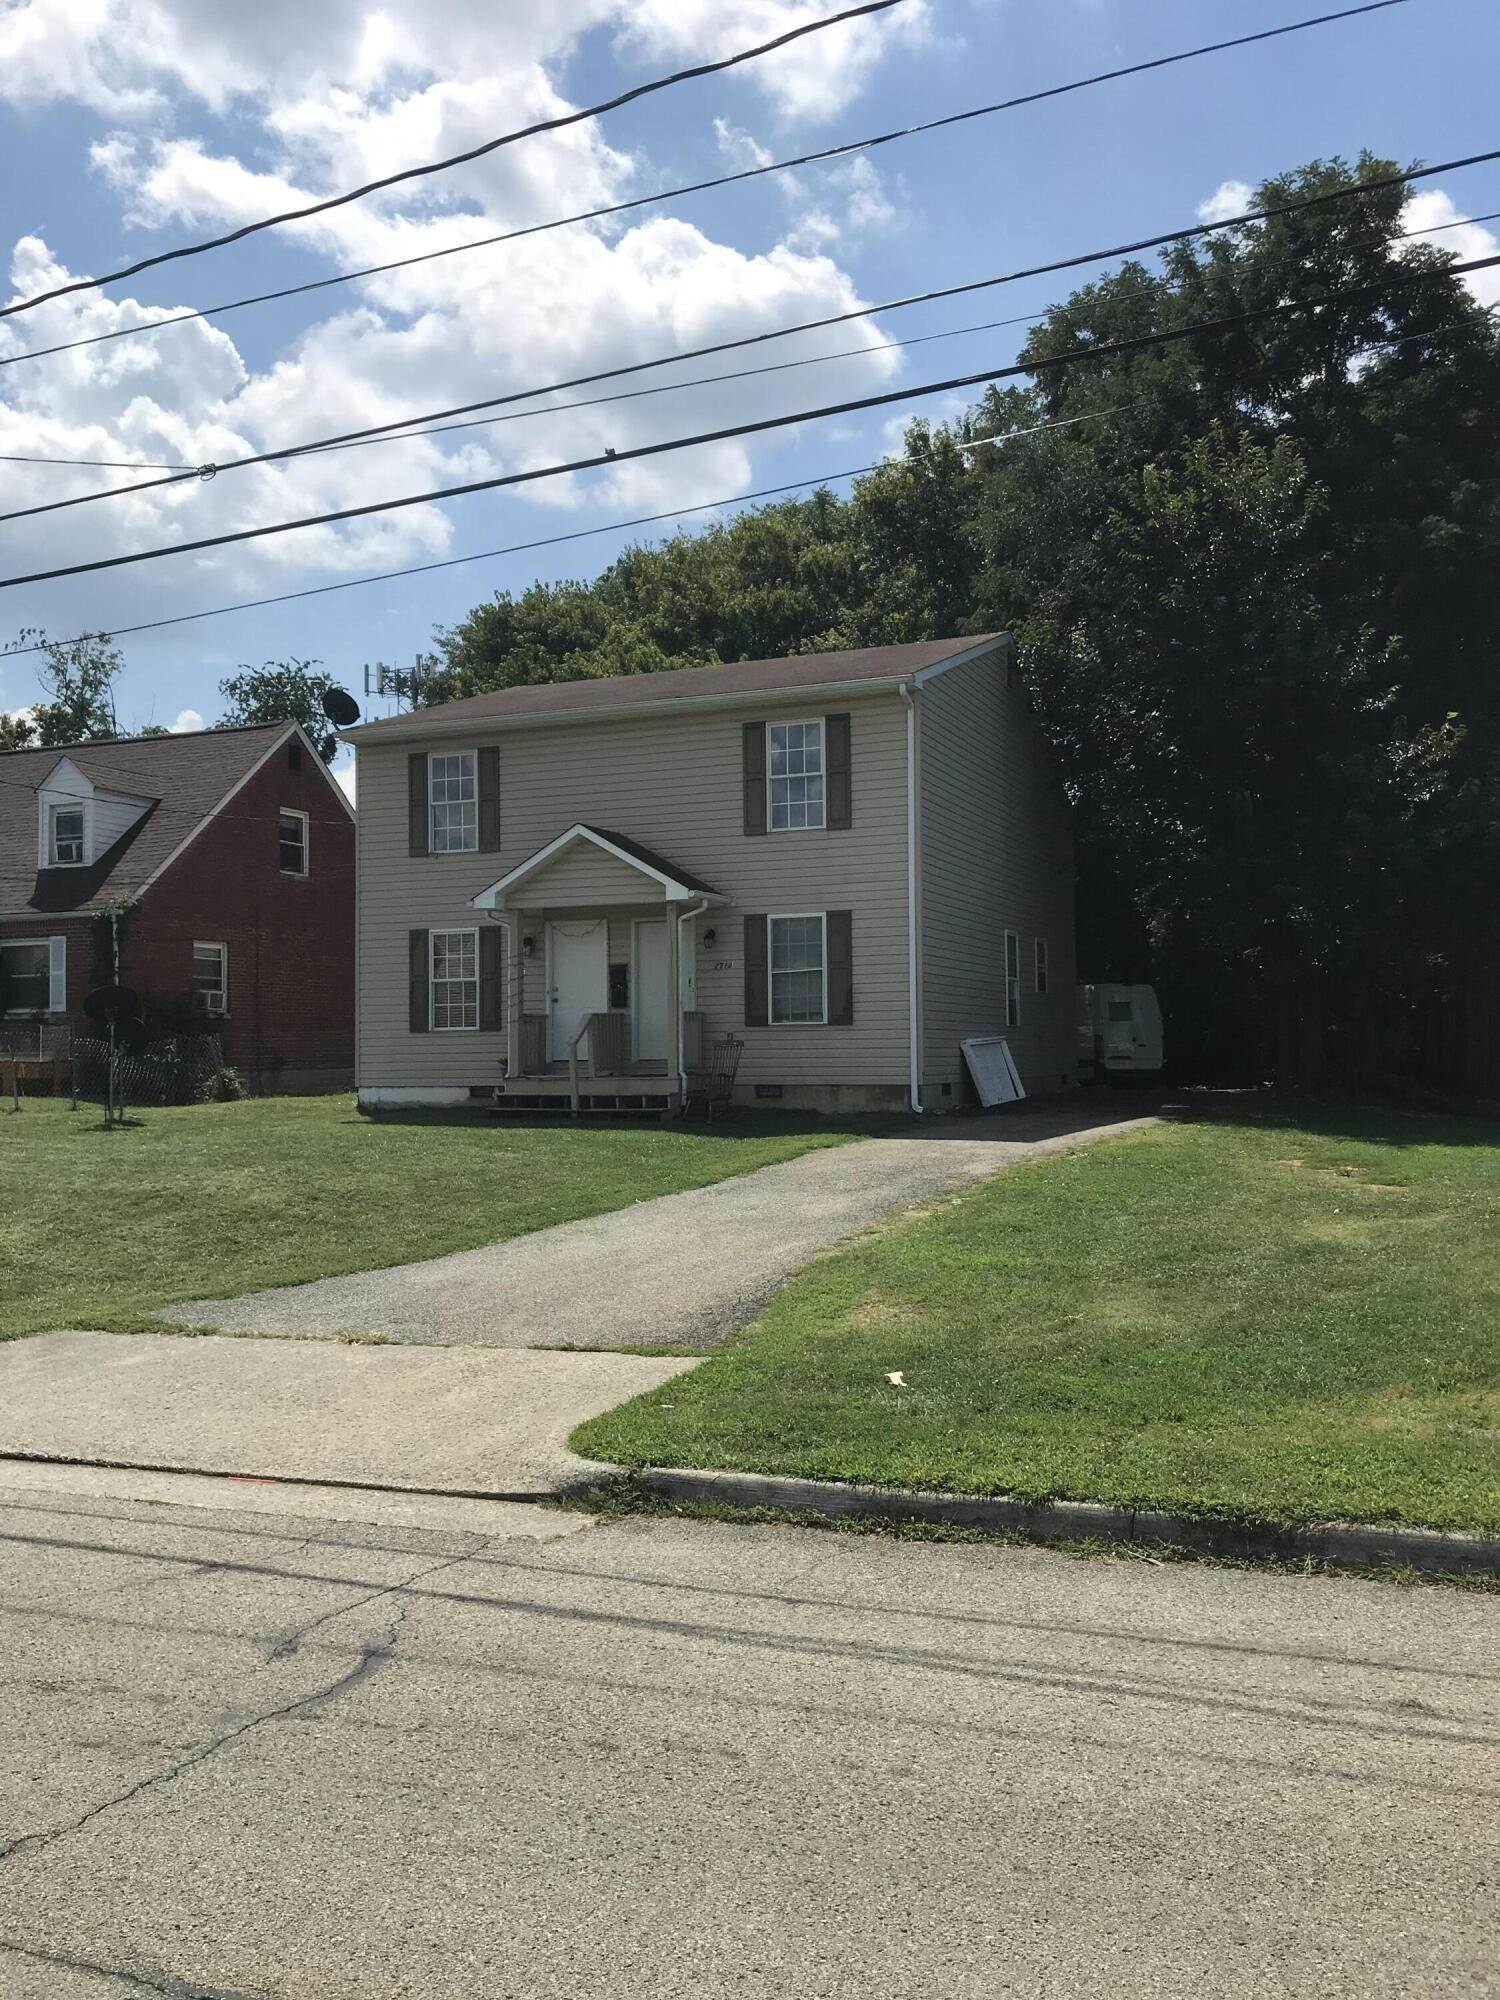 3. Duplex Homes for Sale at Roanoke, VA 24012